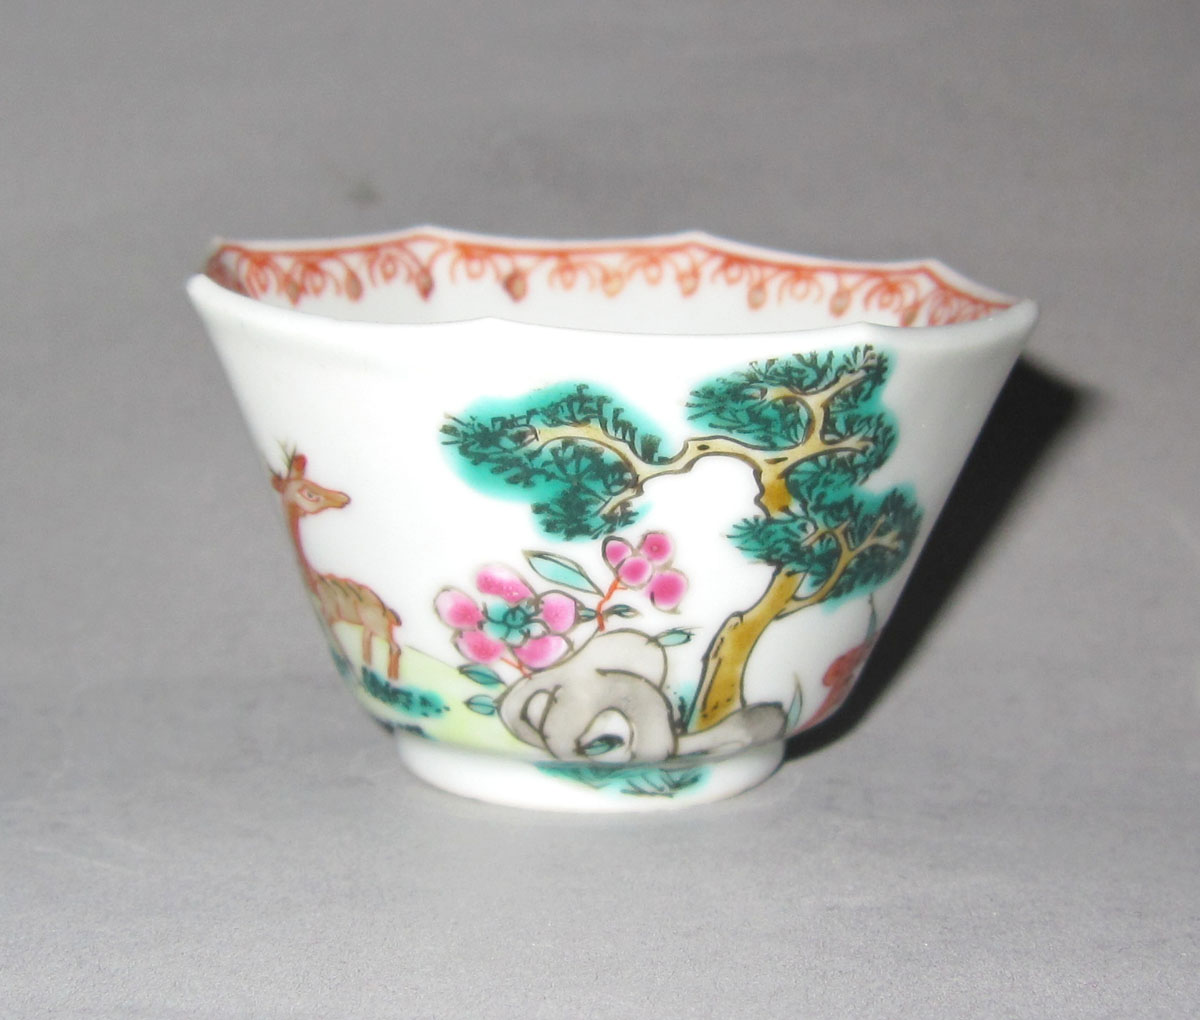 1953.0156.003 A Porcelain teacup